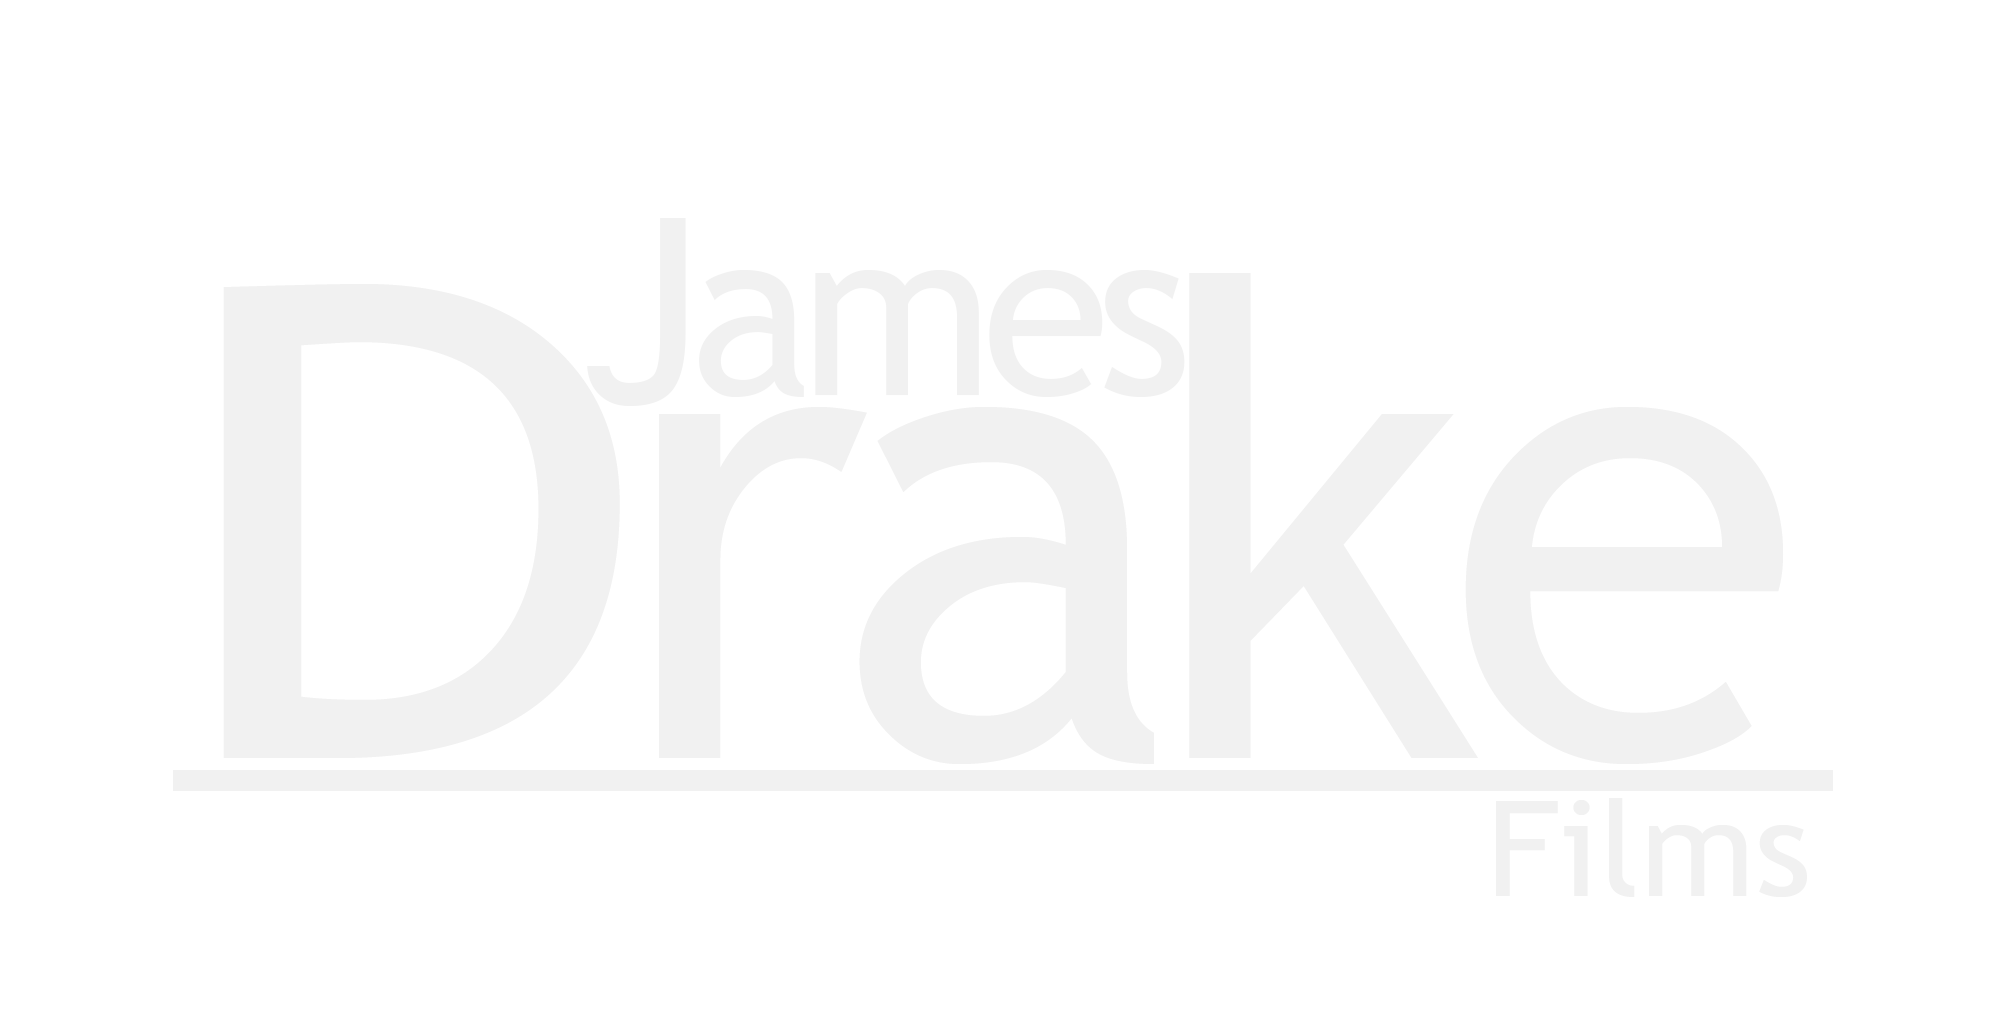 James Drake Films